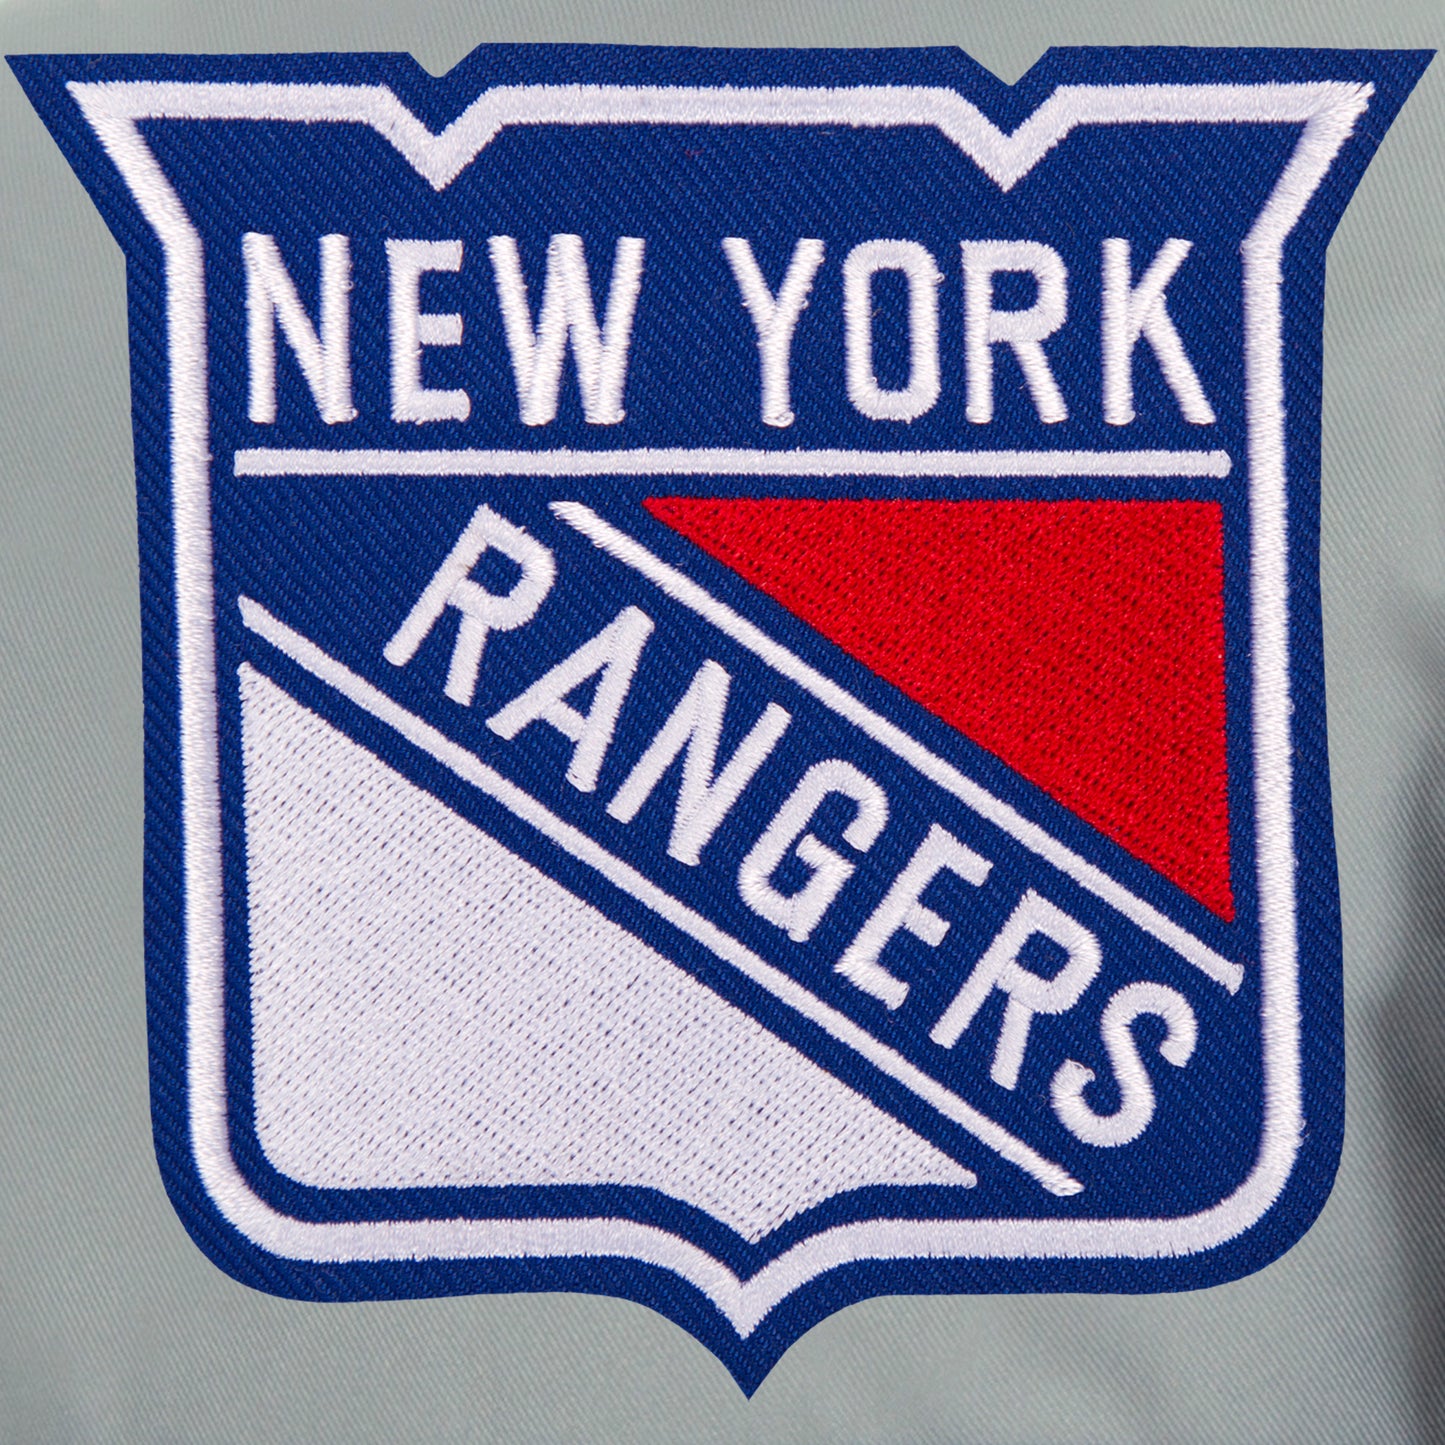 New York Rangers Kids Poly-Twill Jacket